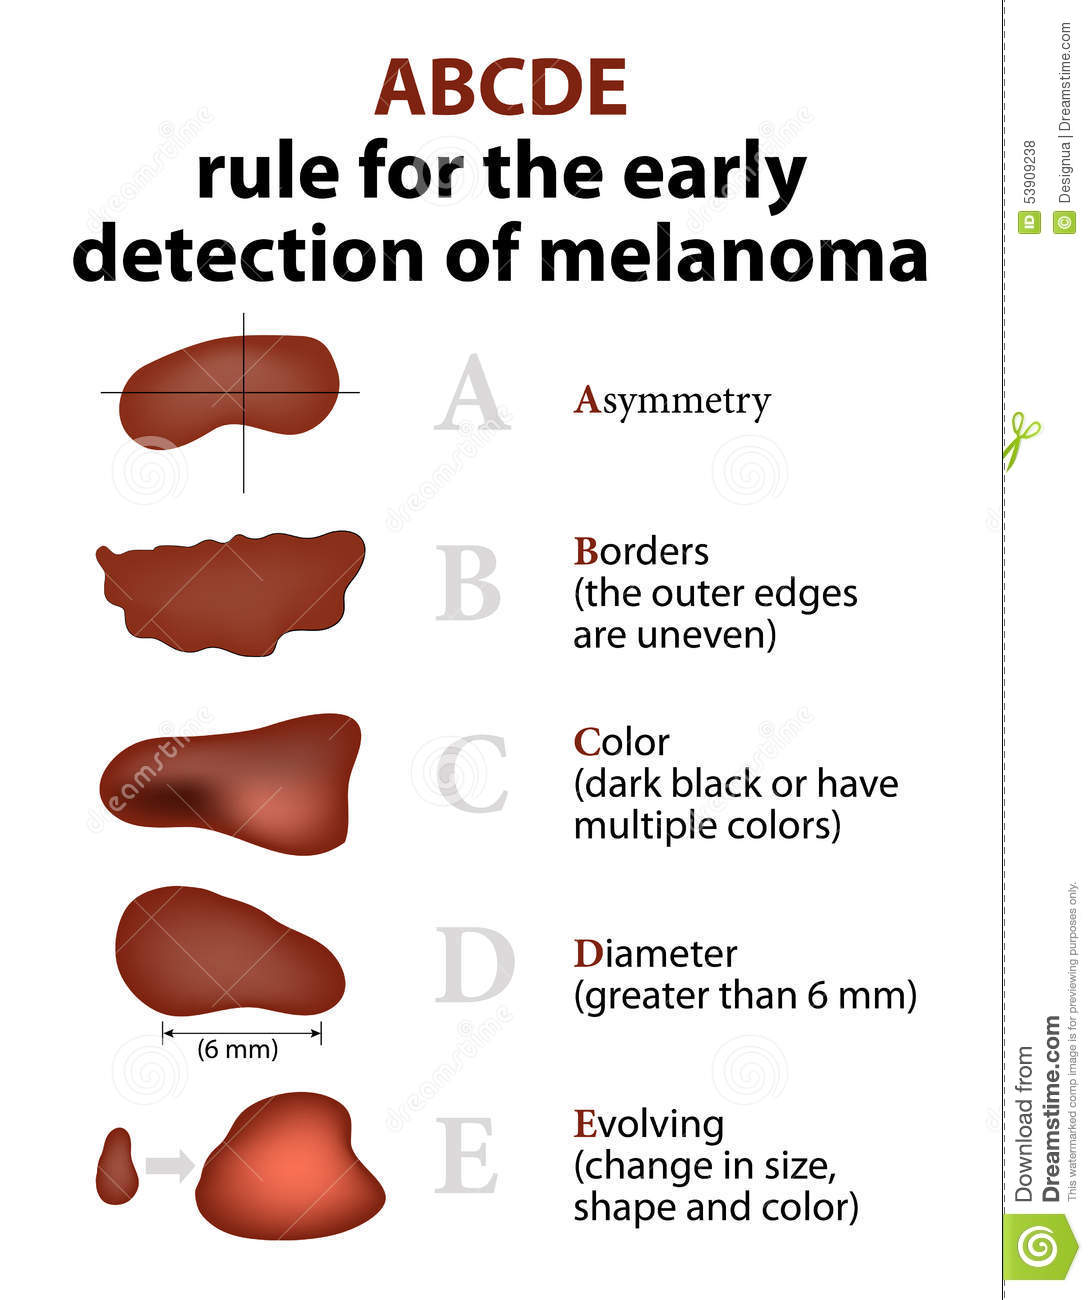 Melanoma Signs and Symptoms